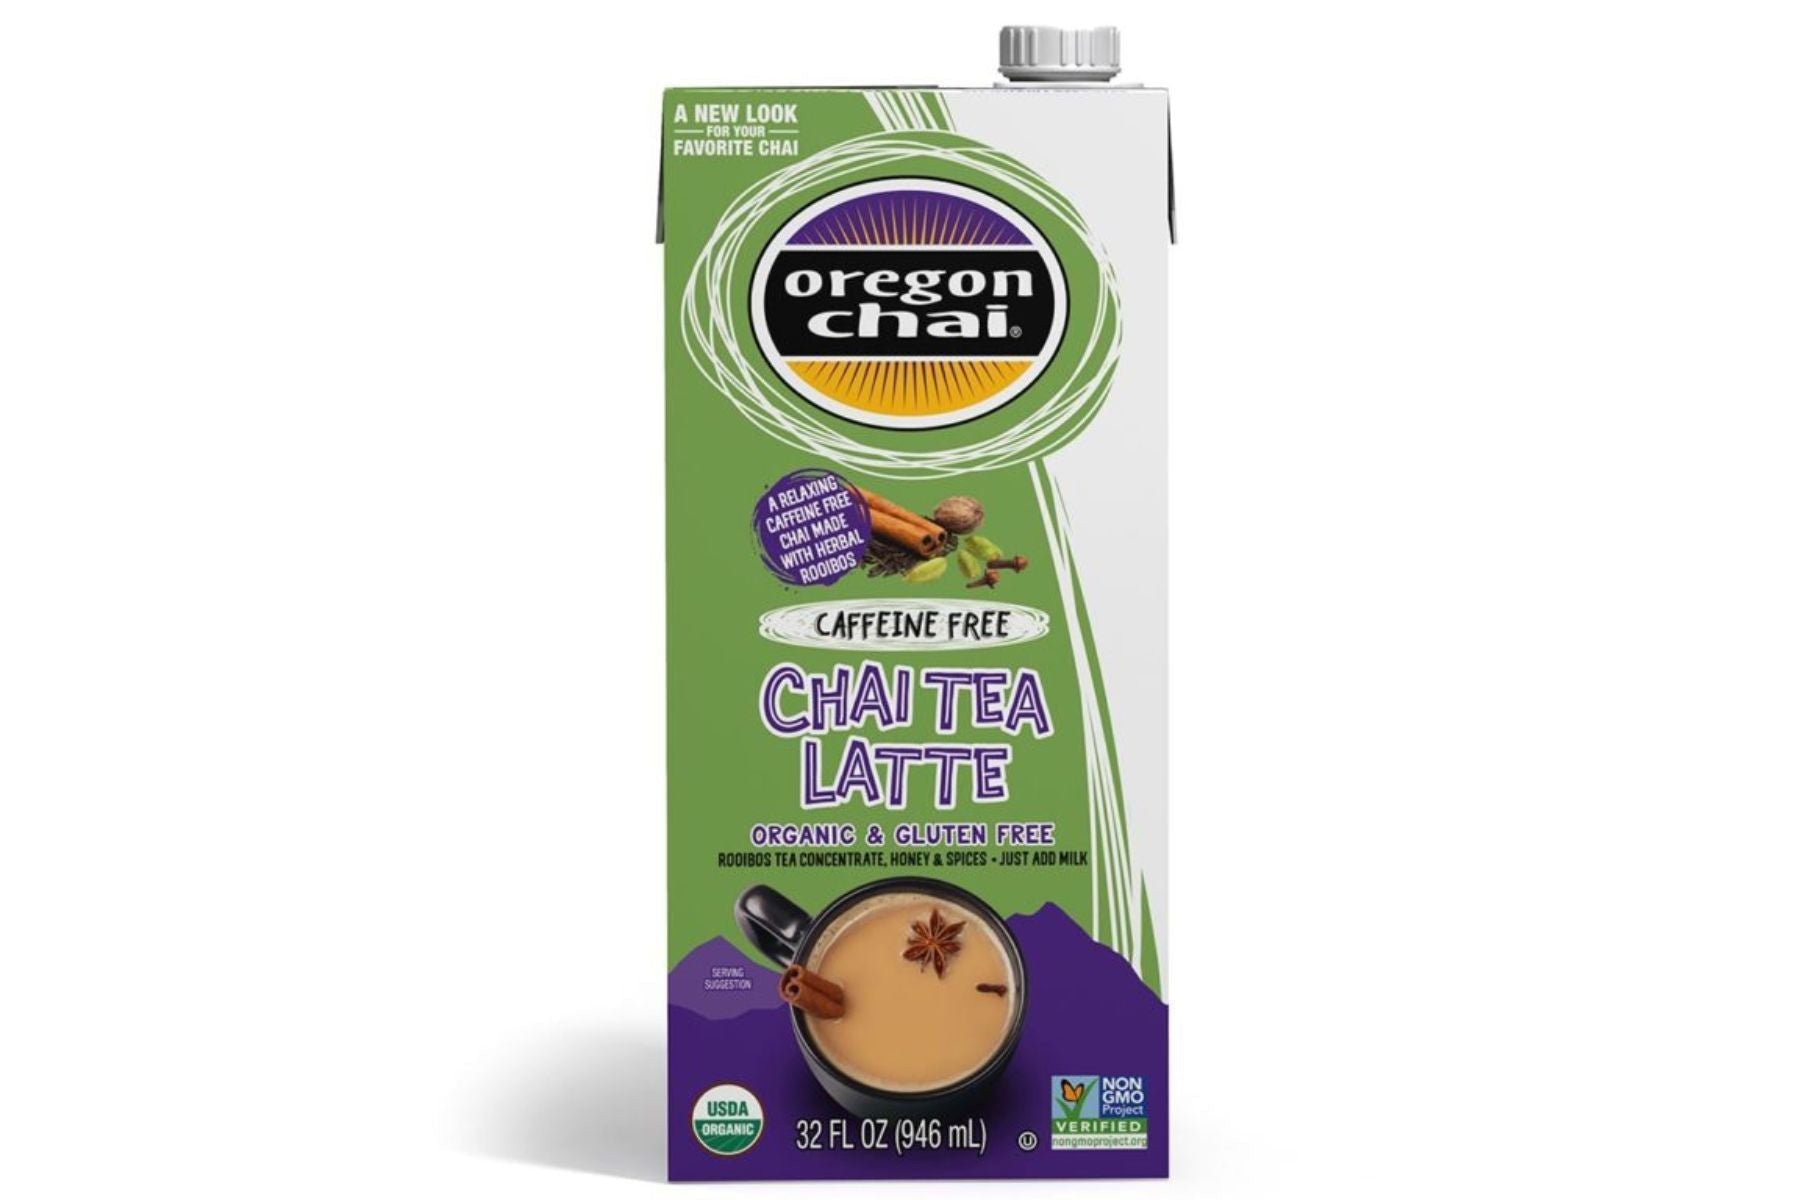 Oregon Chai Liquid: Original Chai Latte Decaf - 32oz Carton